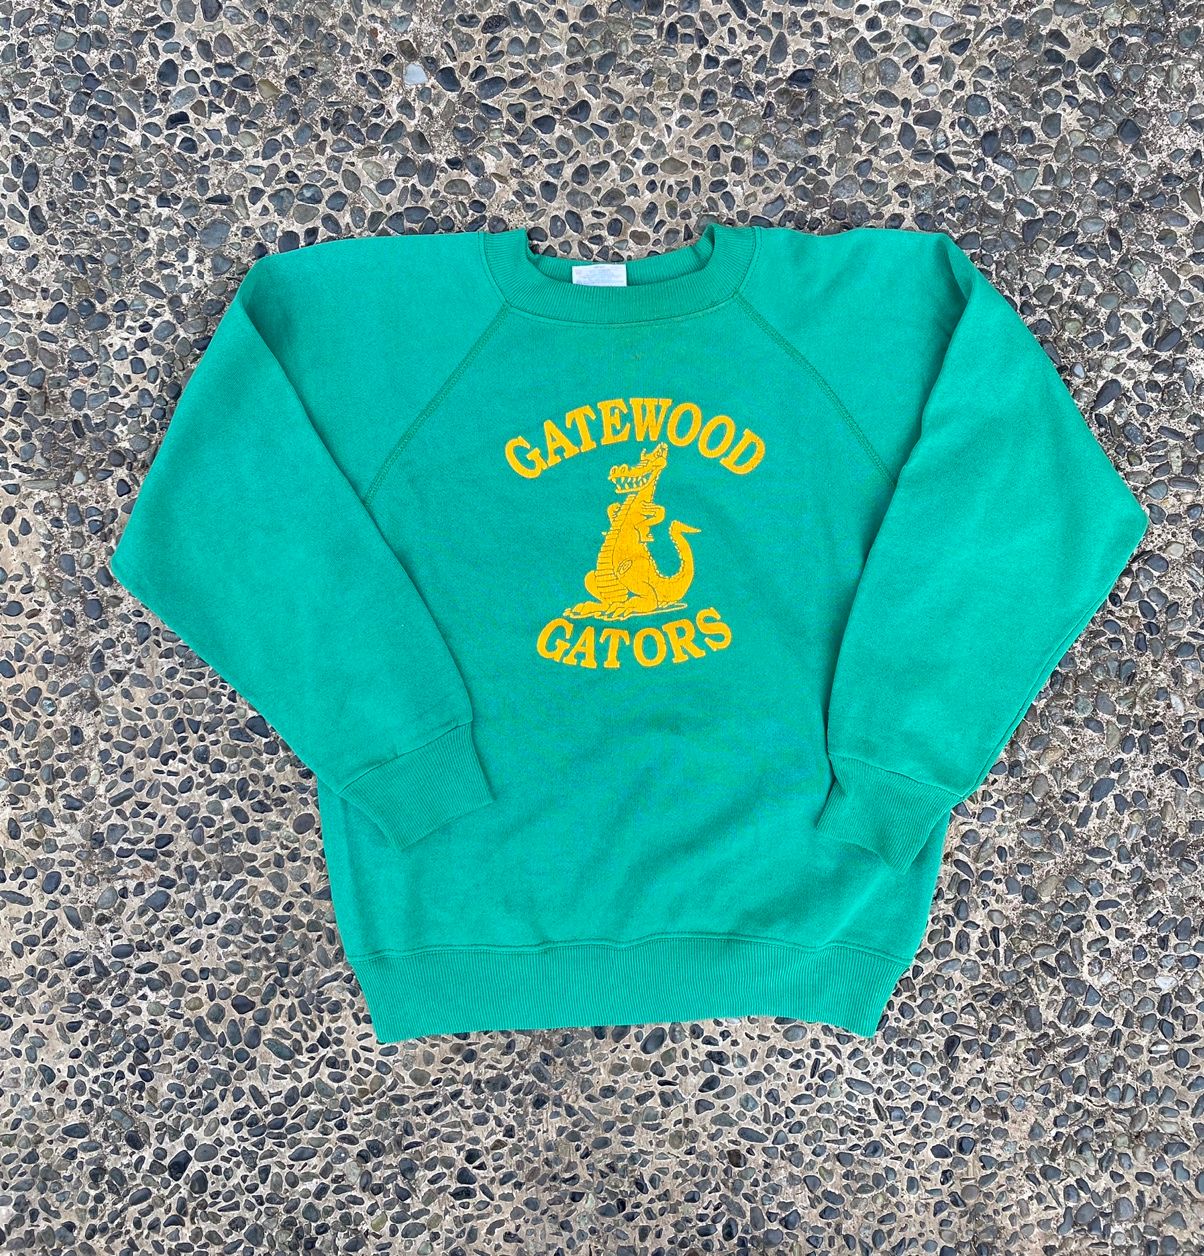 Vintage 90’s Hanes gatewood gators green faded sweatshirts Size US S / EU 44-46 / 1 - 1 Preview